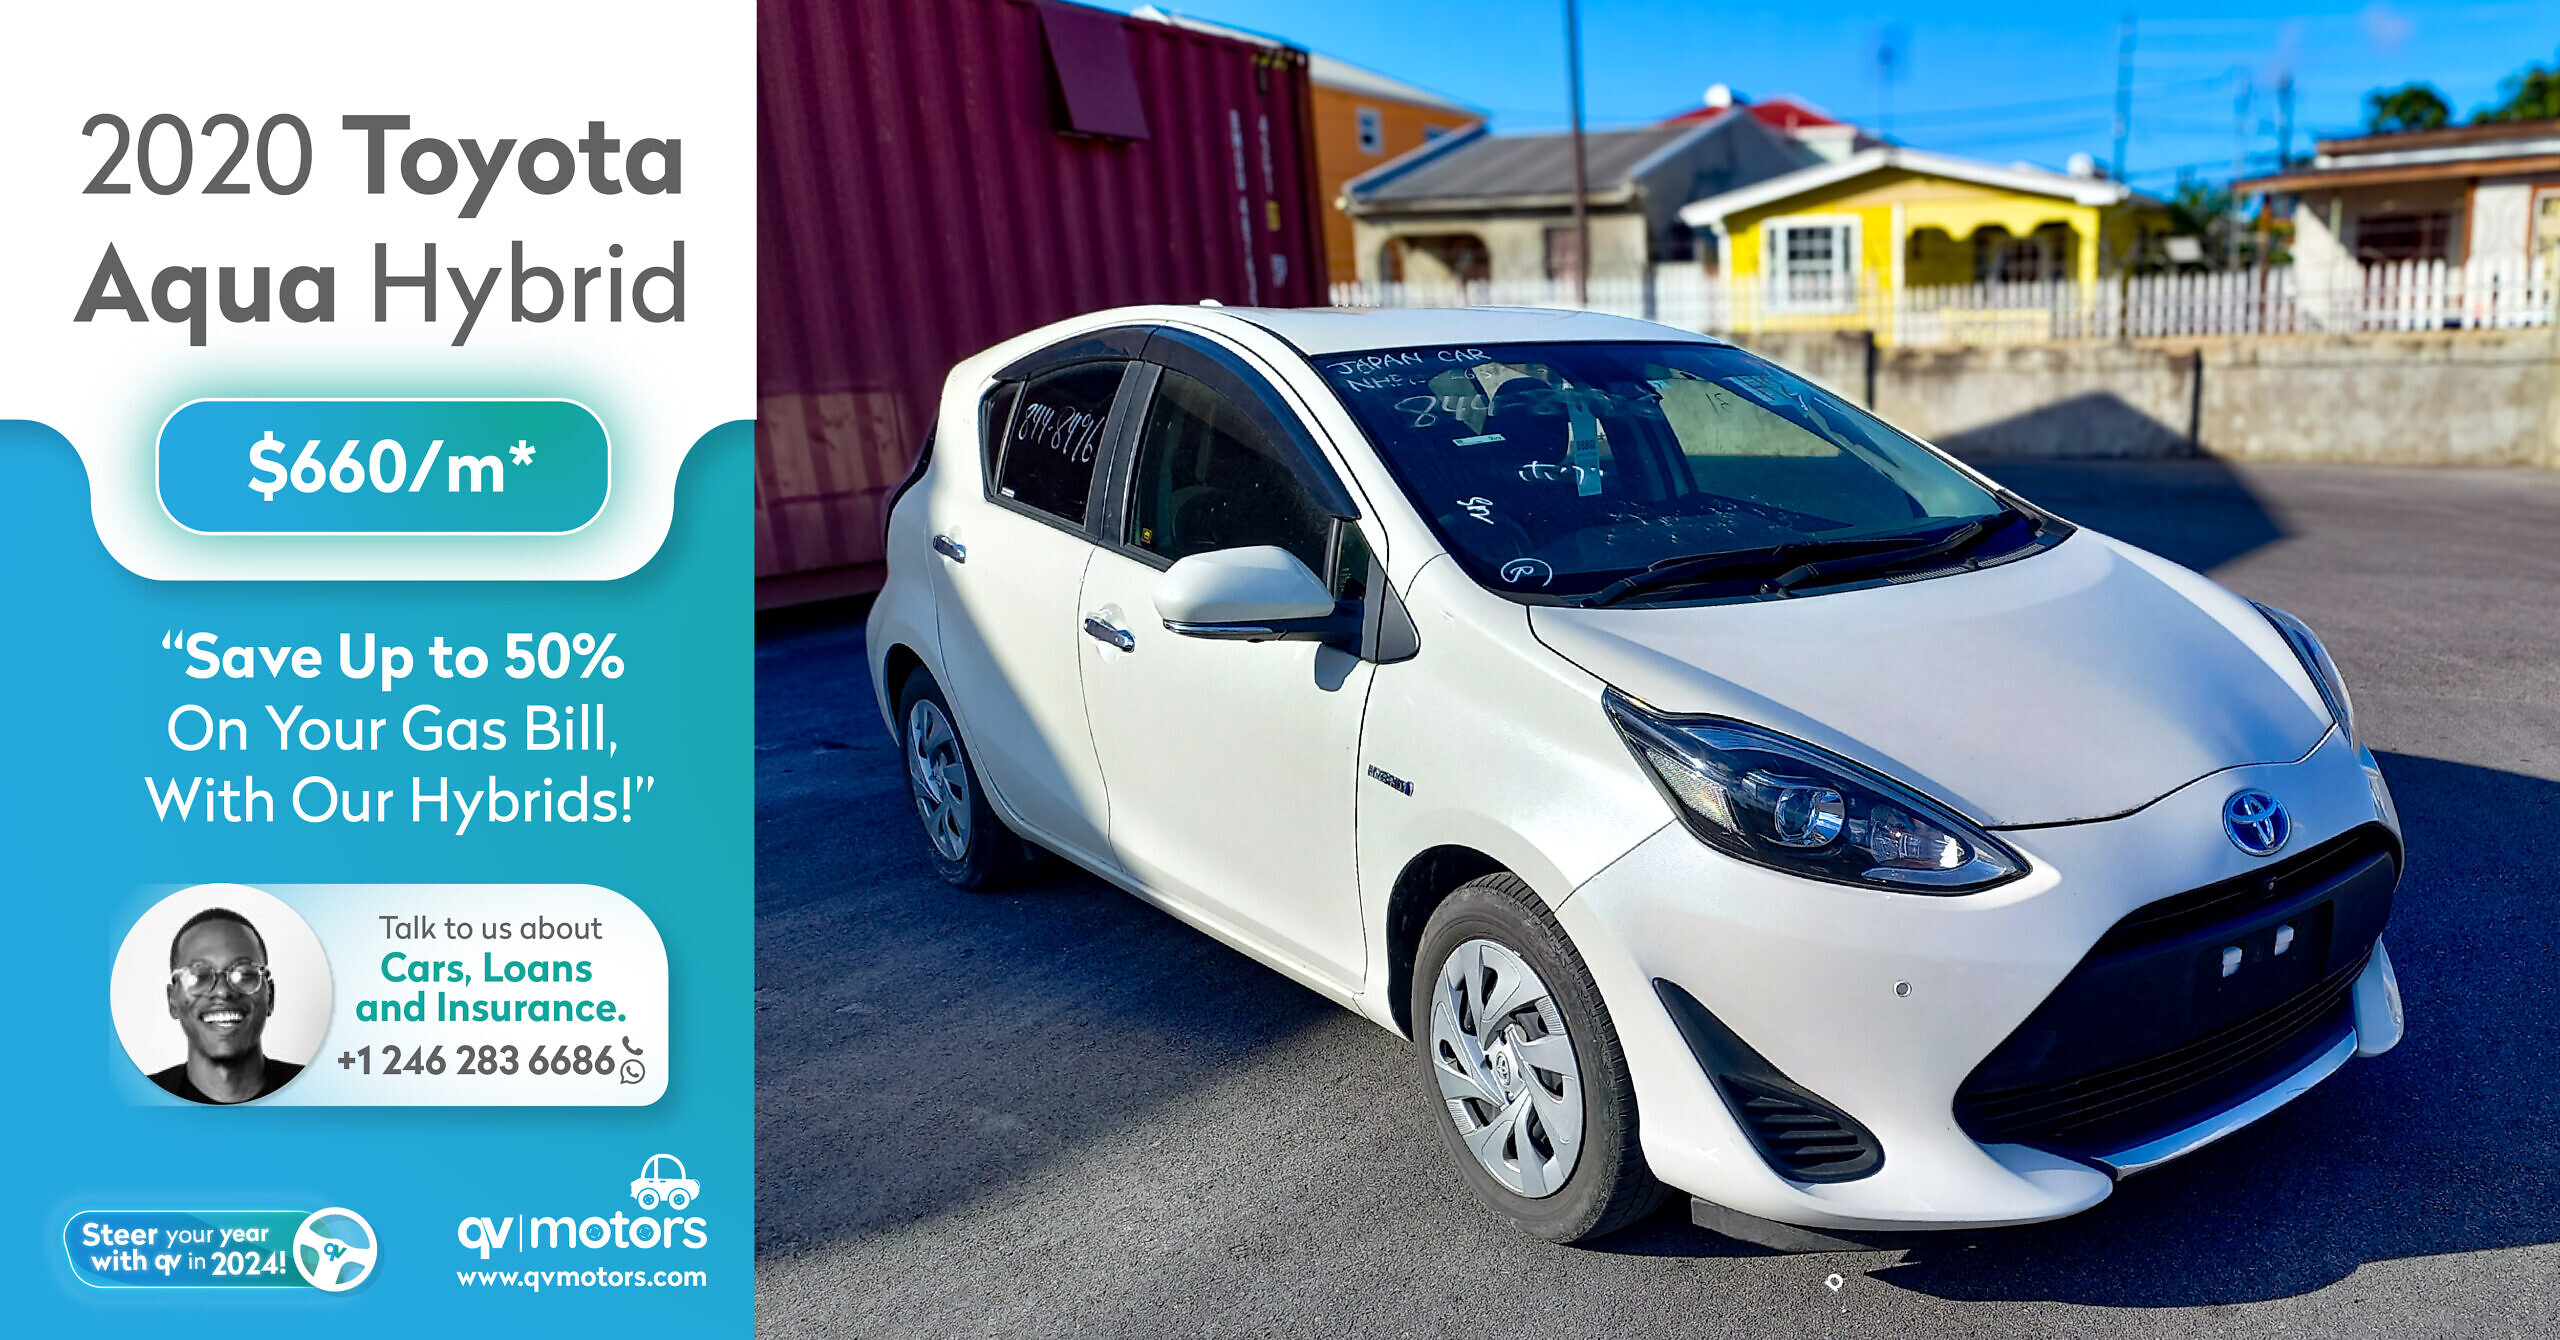 2020 Toyota Aqua Hybrid – Save up to 50% on gas!